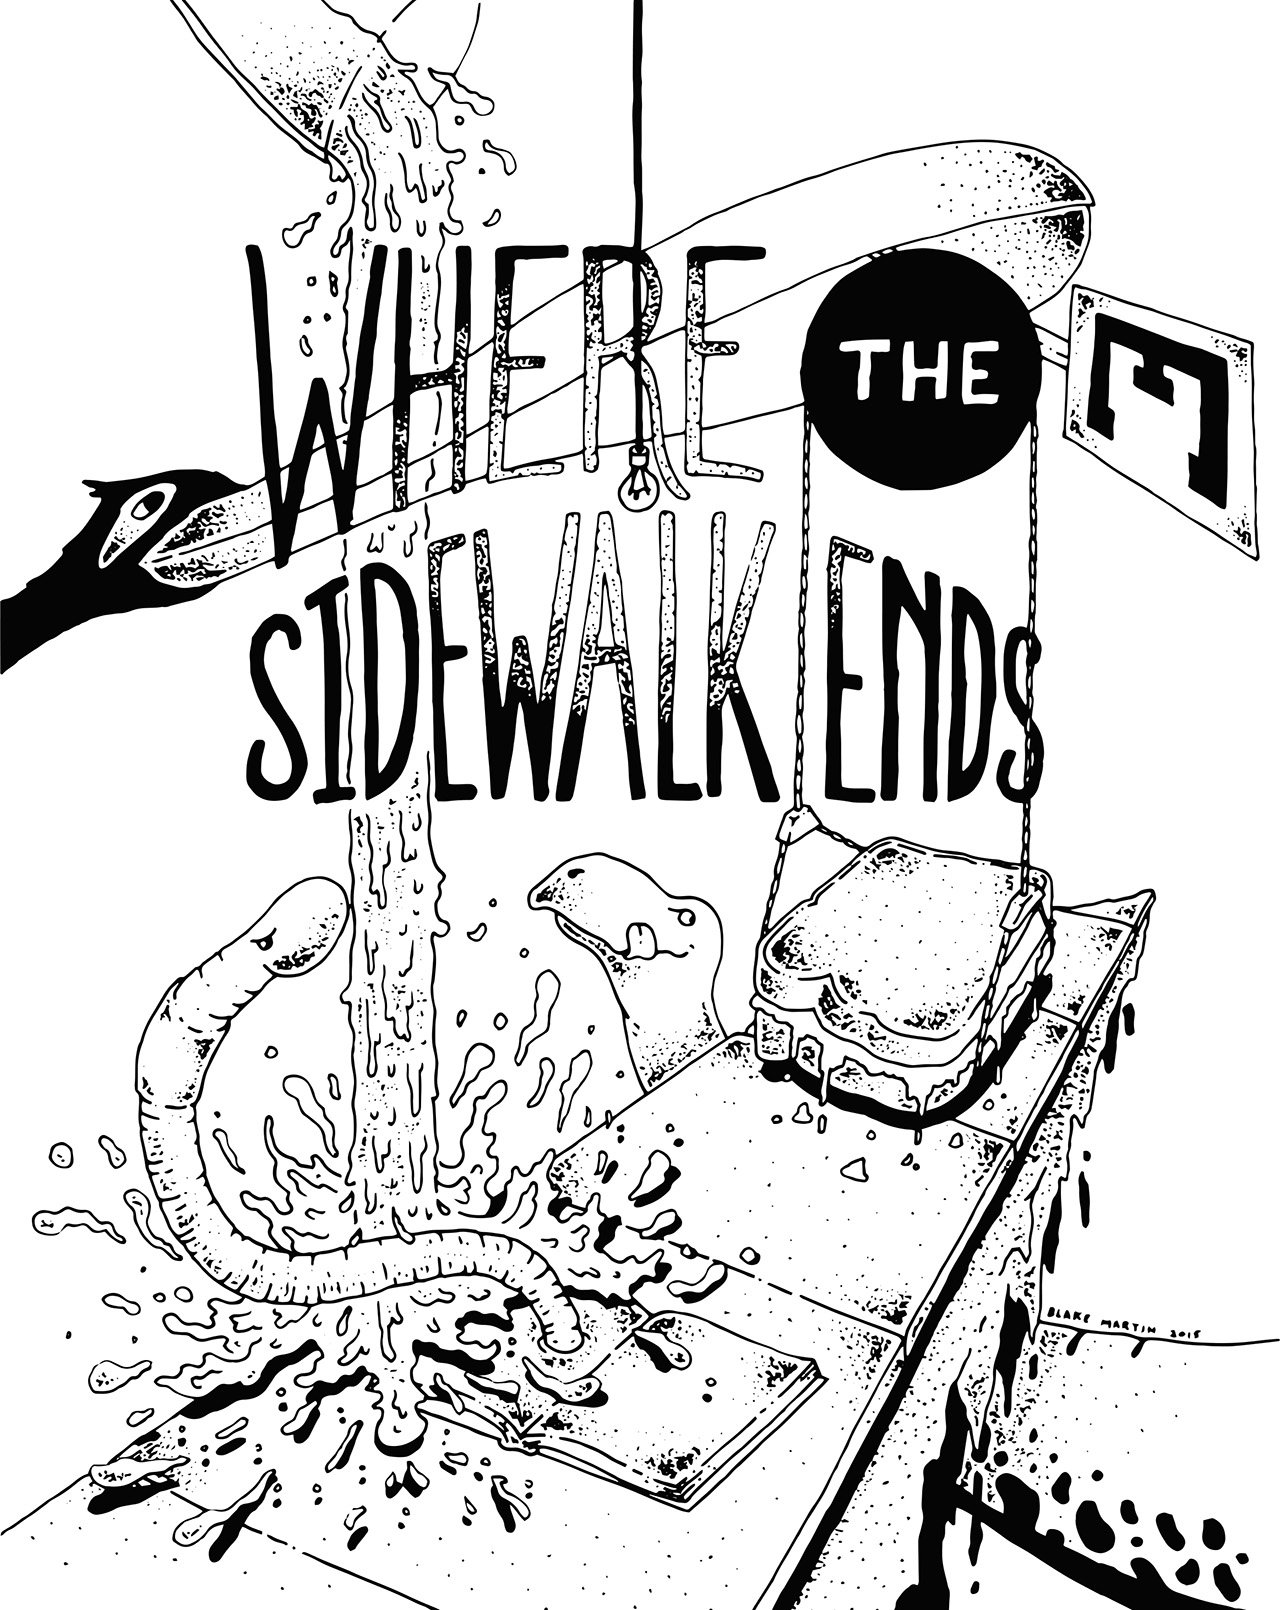 Blake Martin | "Where the Sidewalk Ends" by Shel Silverstein